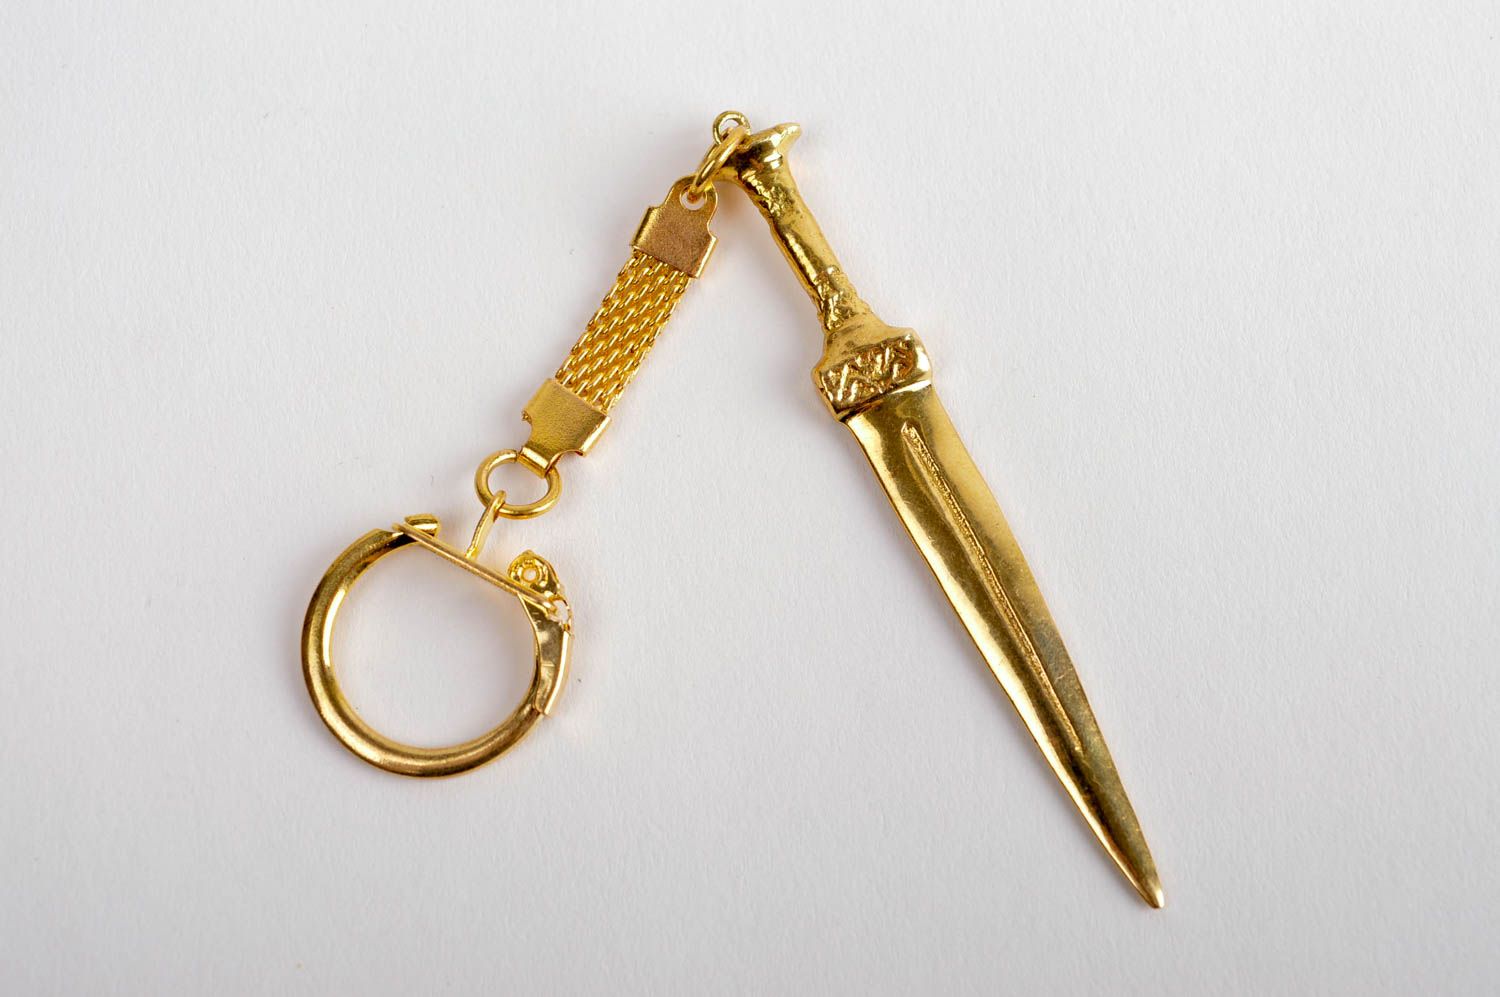 Handmade metal keychain fashion accessories metal craft best gifts for men photo 2